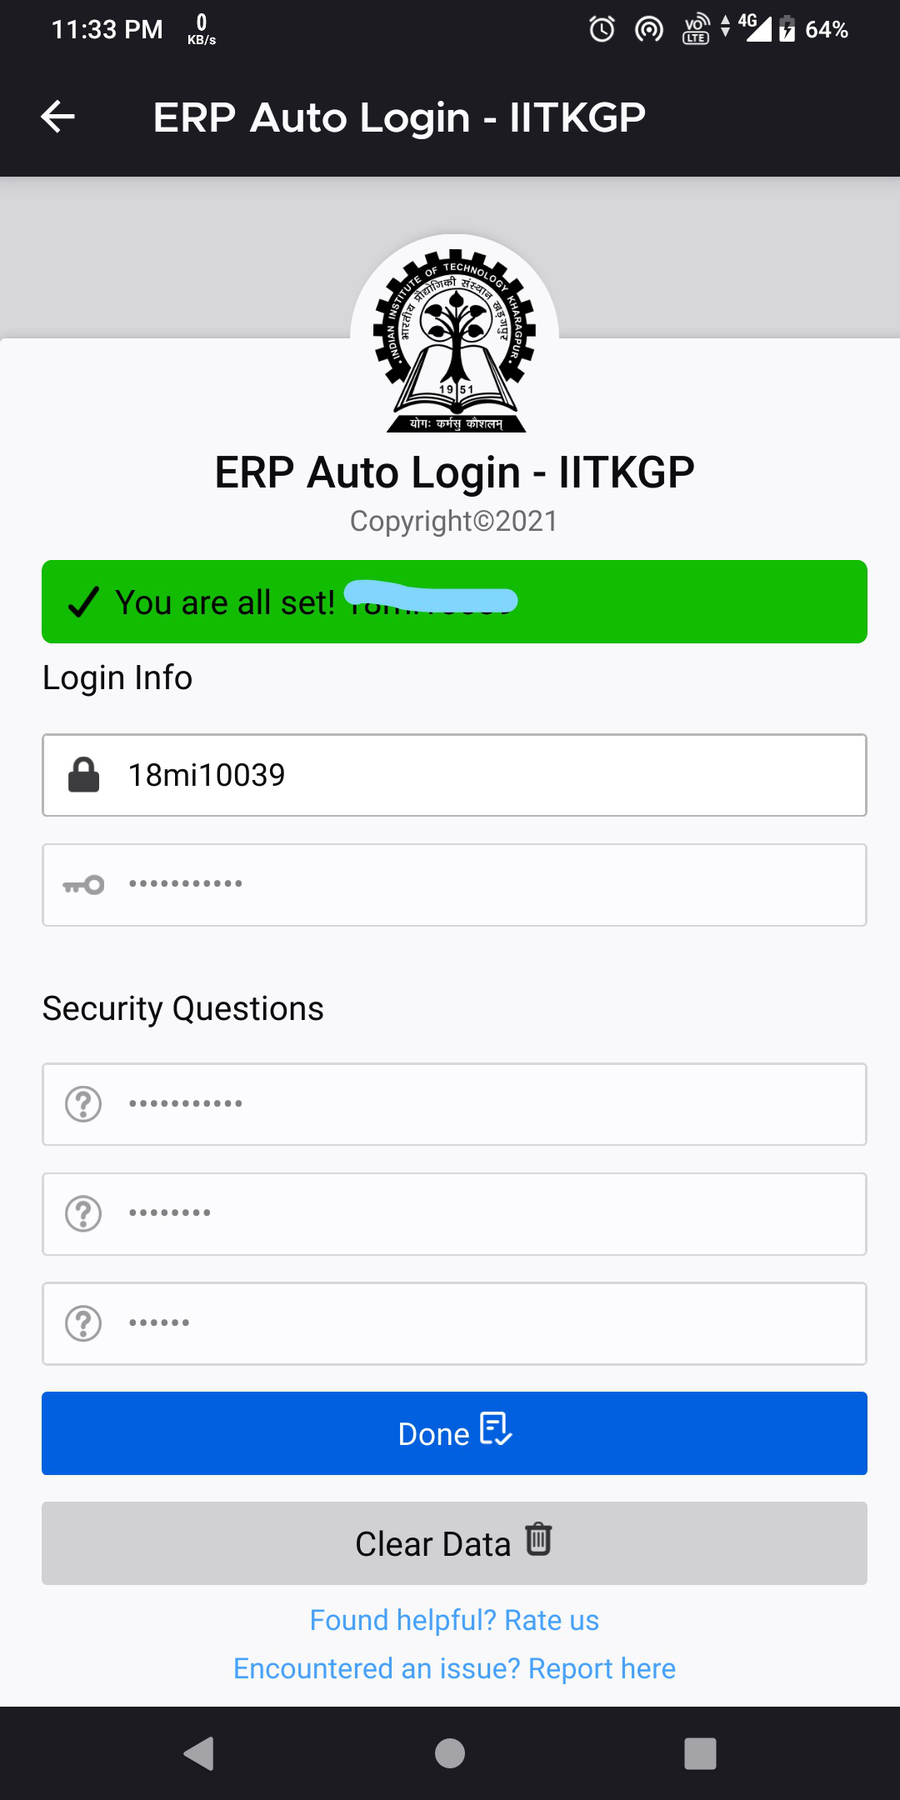 ERP Auto Login - IITKGP